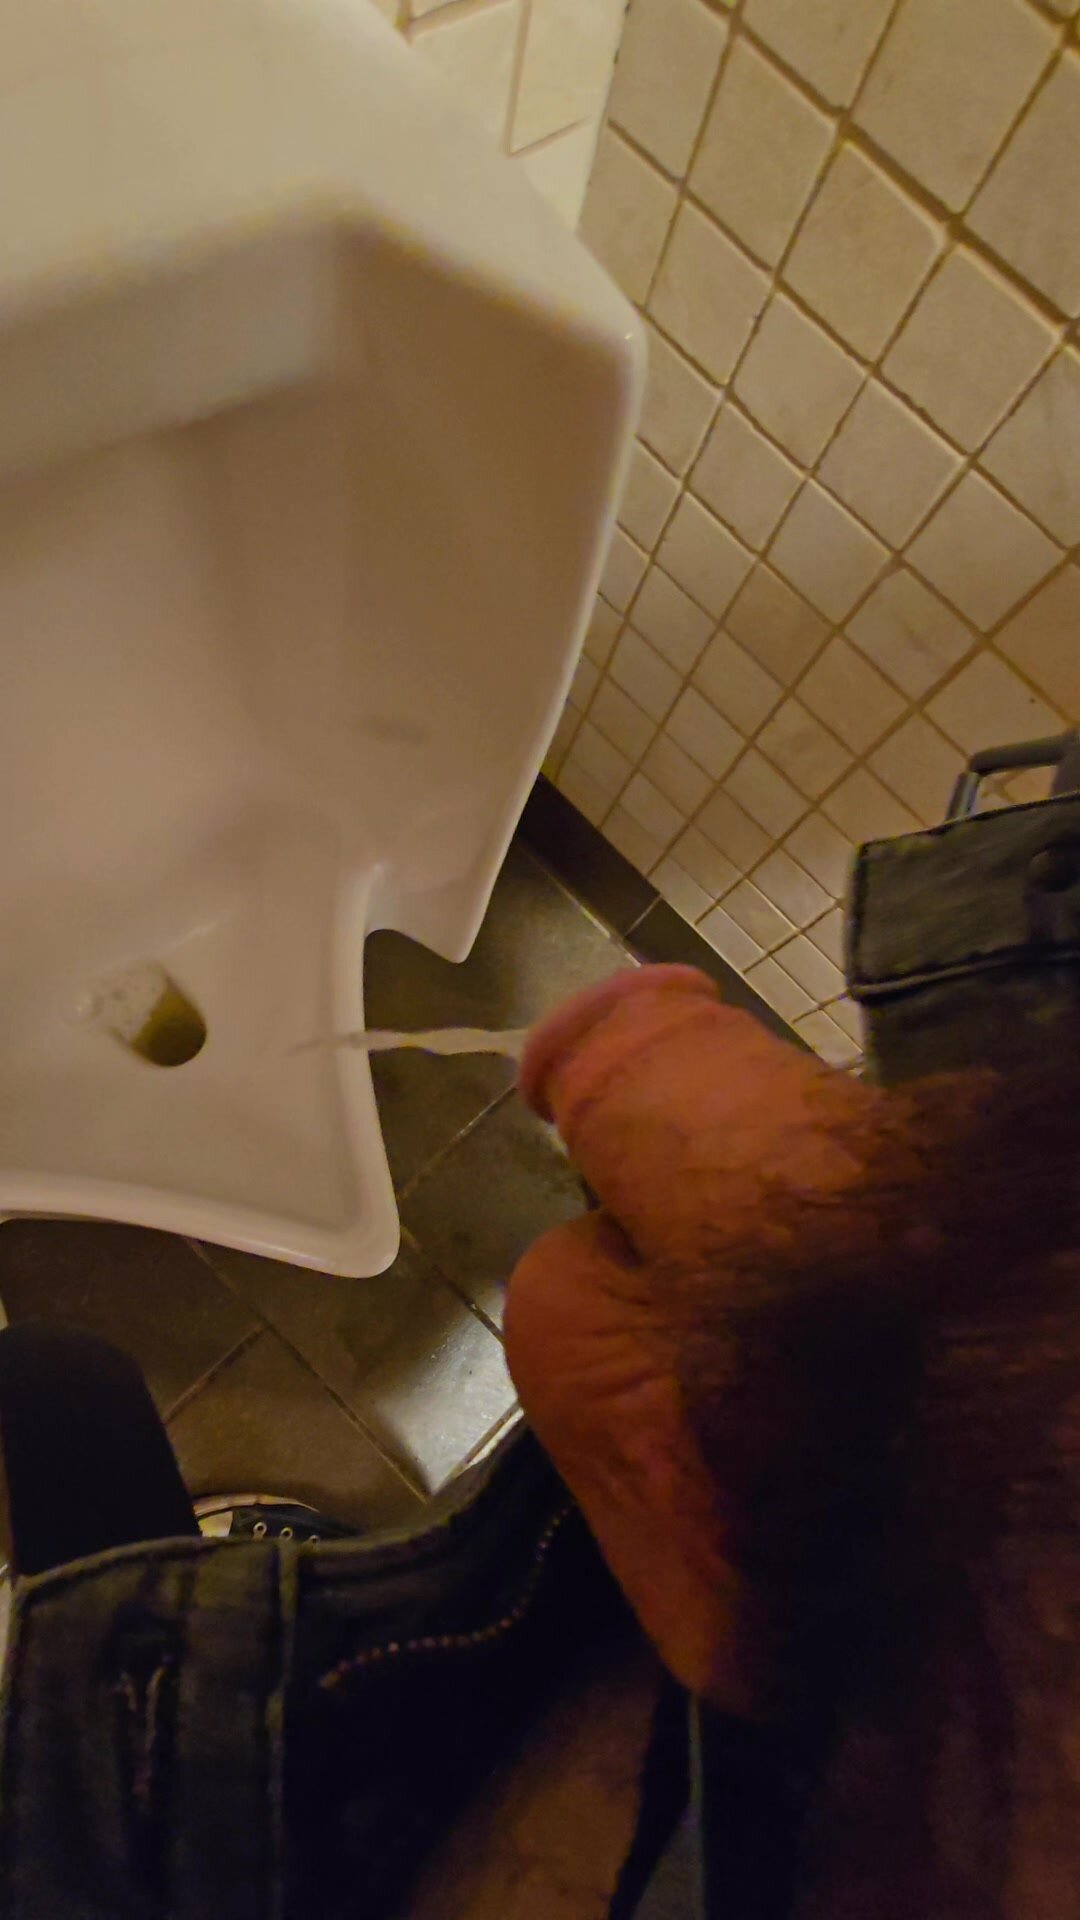 Quick Messy Urinal Piss in Jockstrap